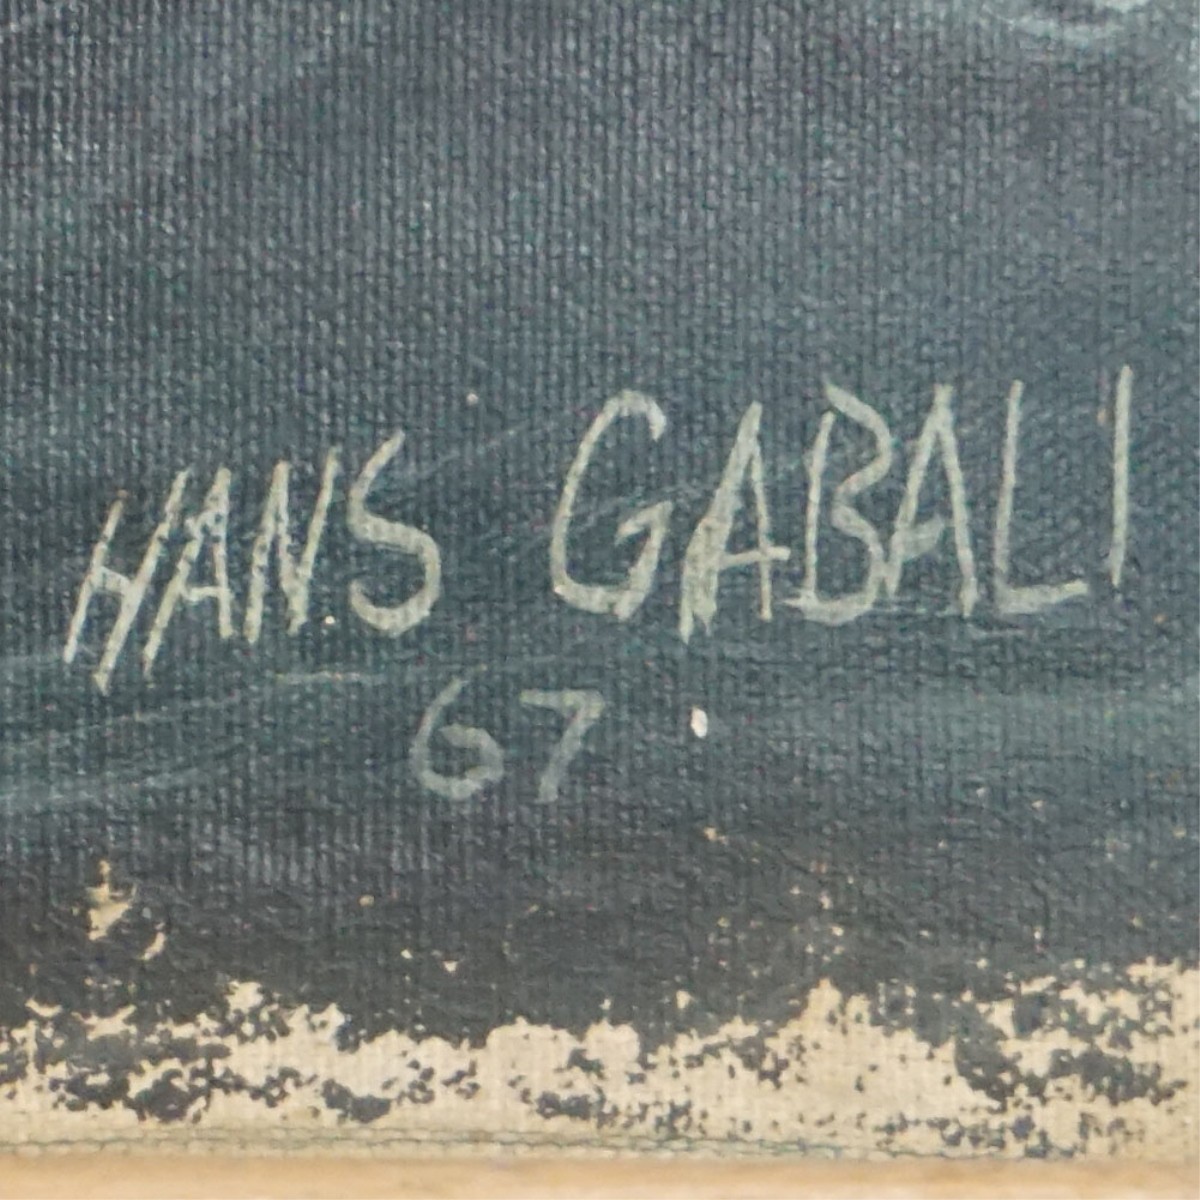 Hans Gabali (late 20th C.)